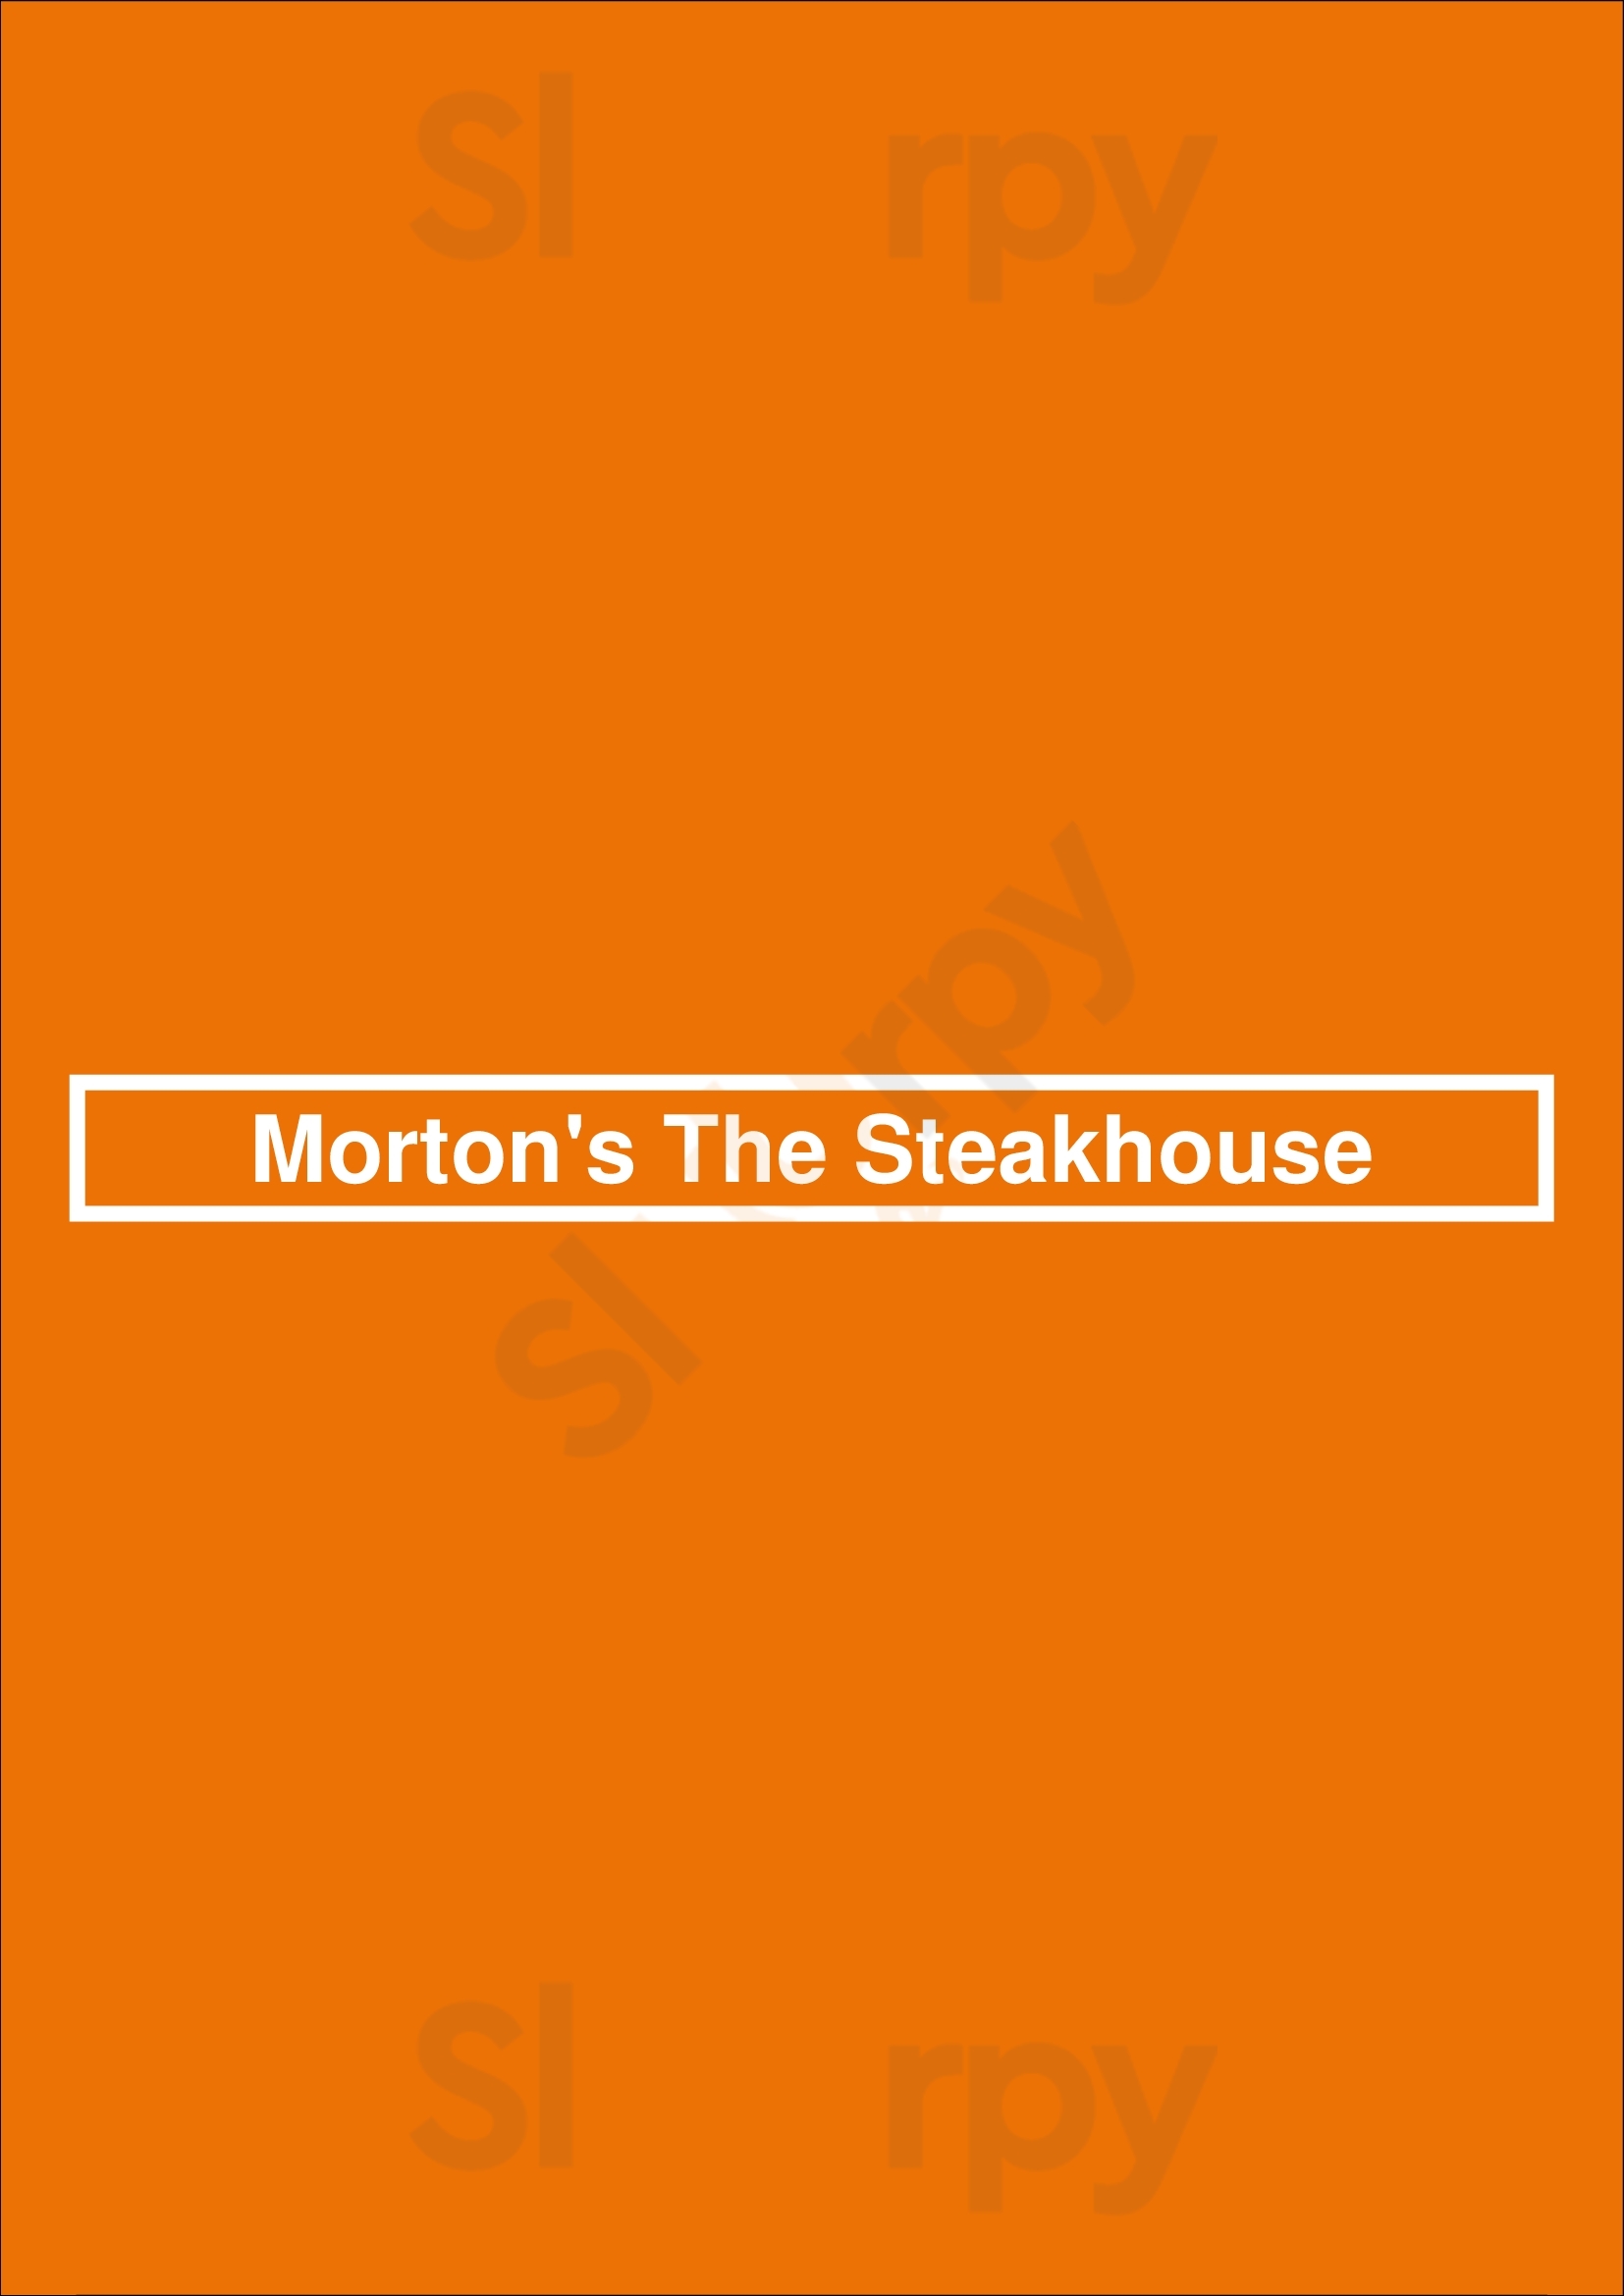 Morton's The Steakhouse San Diego Menu - 1